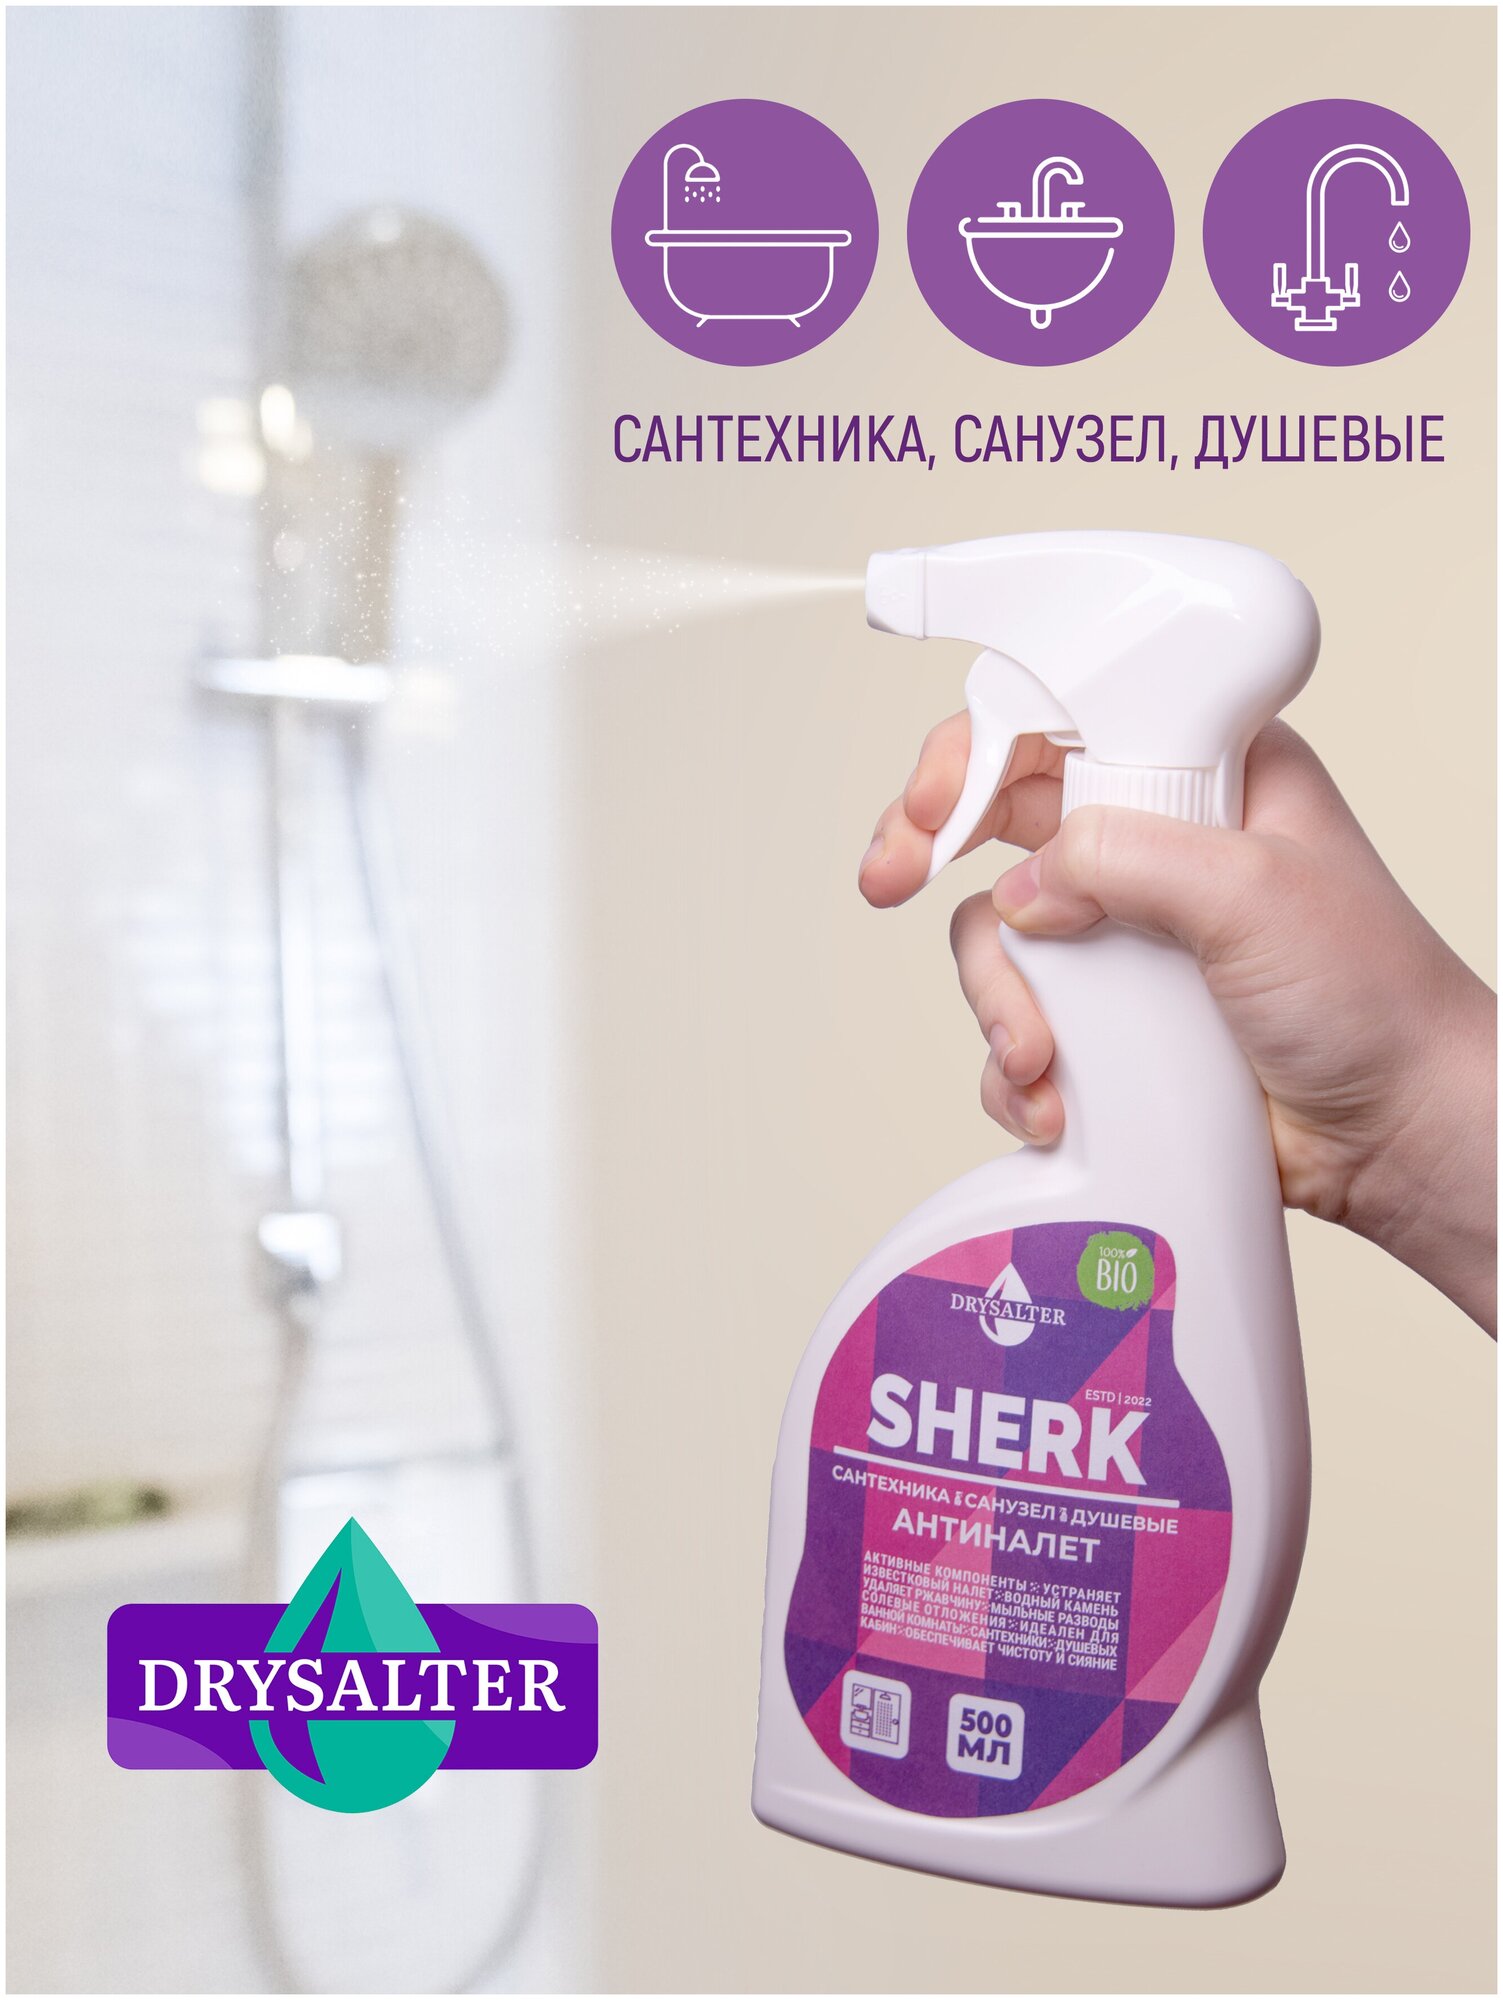 Антиналёт SHERK чистящее средство для душевых и ванных комнат DRYSALTER спрей 500 мл